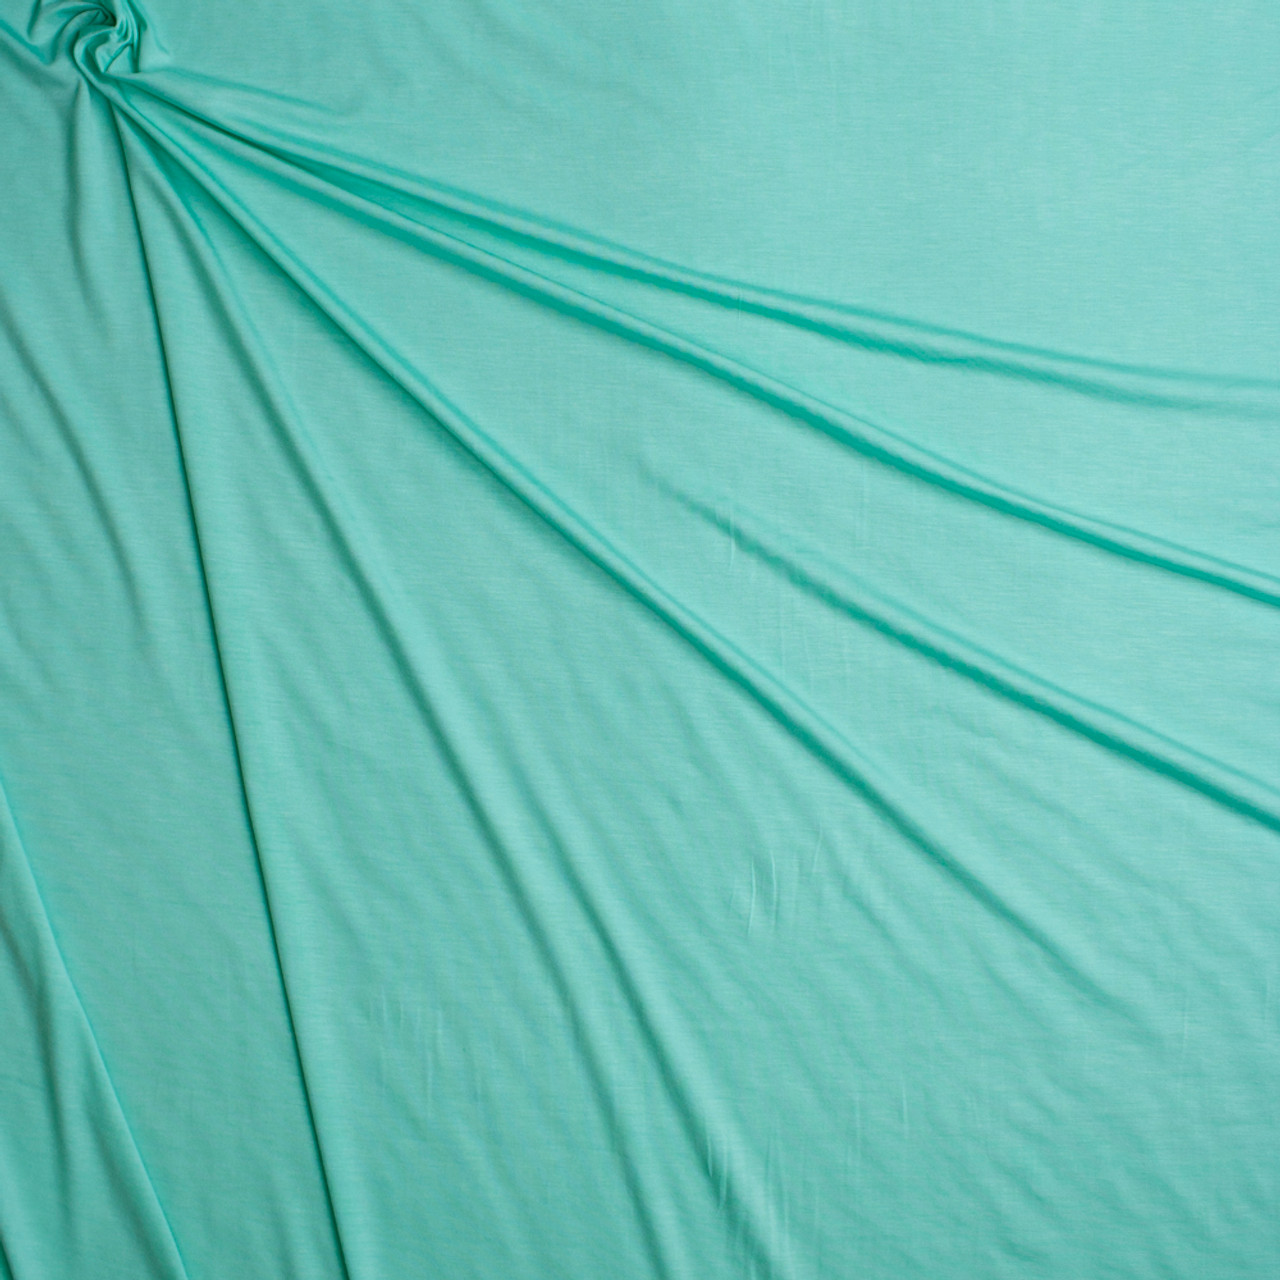 Cali Fabrics Mint Green Stretch Modal Jersey Knit Fabric by the Yard